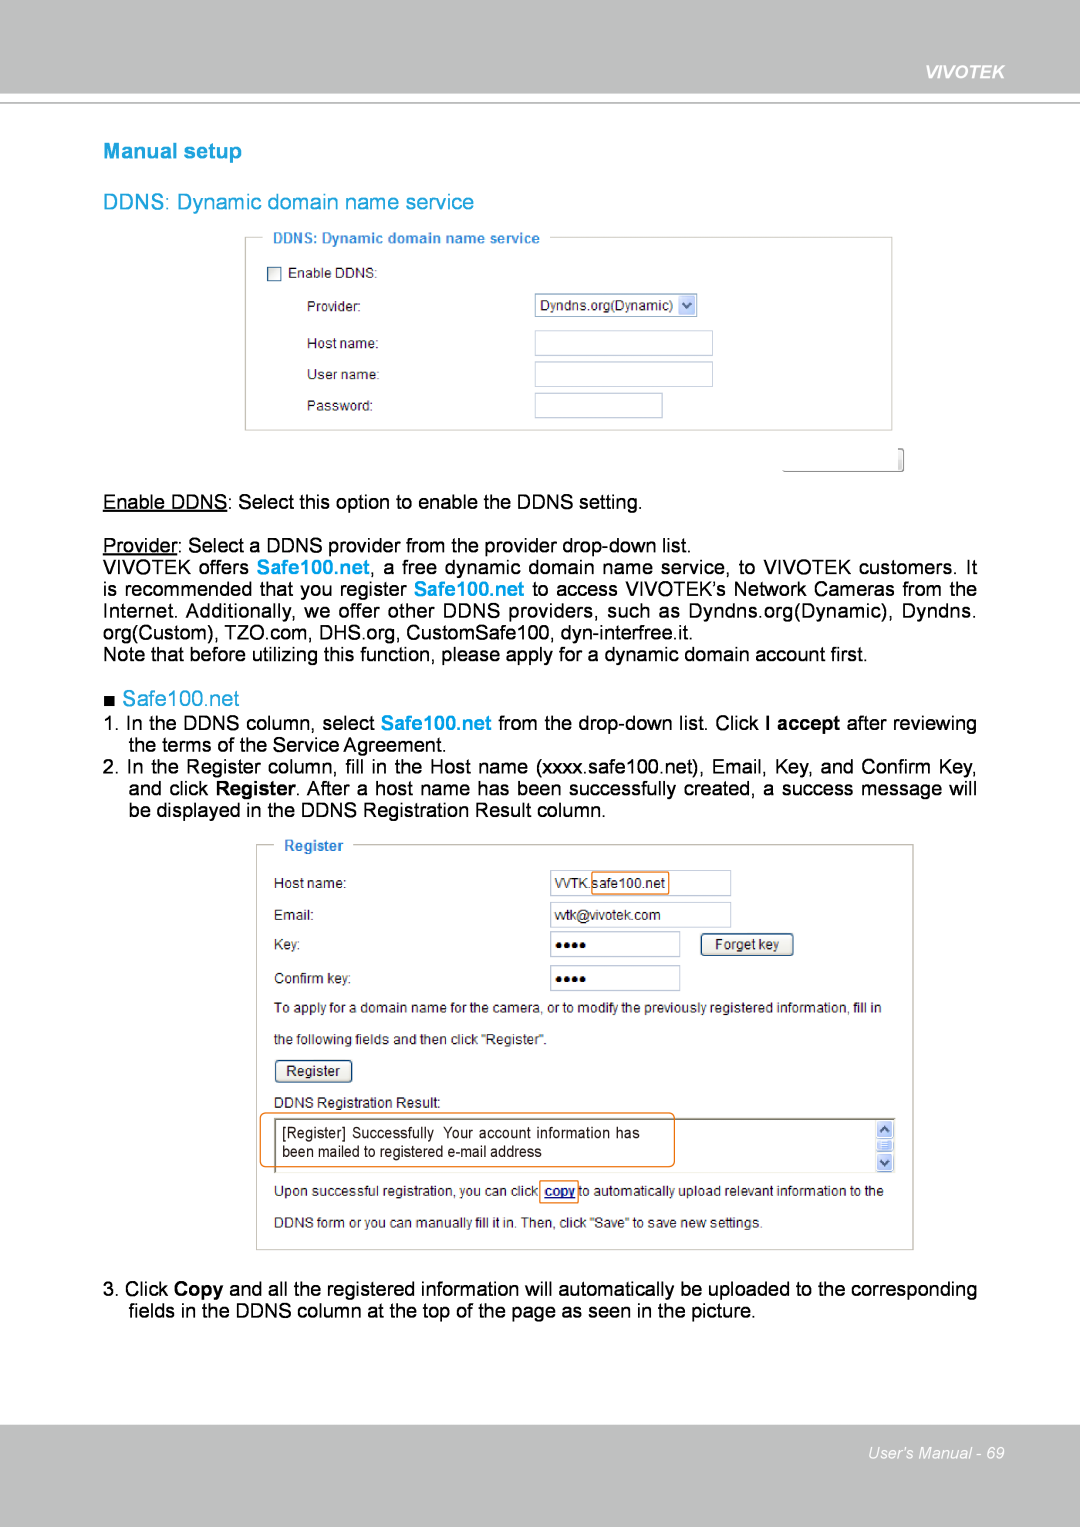 Vivotek IP8364-C user manual Manual setup, DDNS: Dynamic domain name service, Safe100.net 